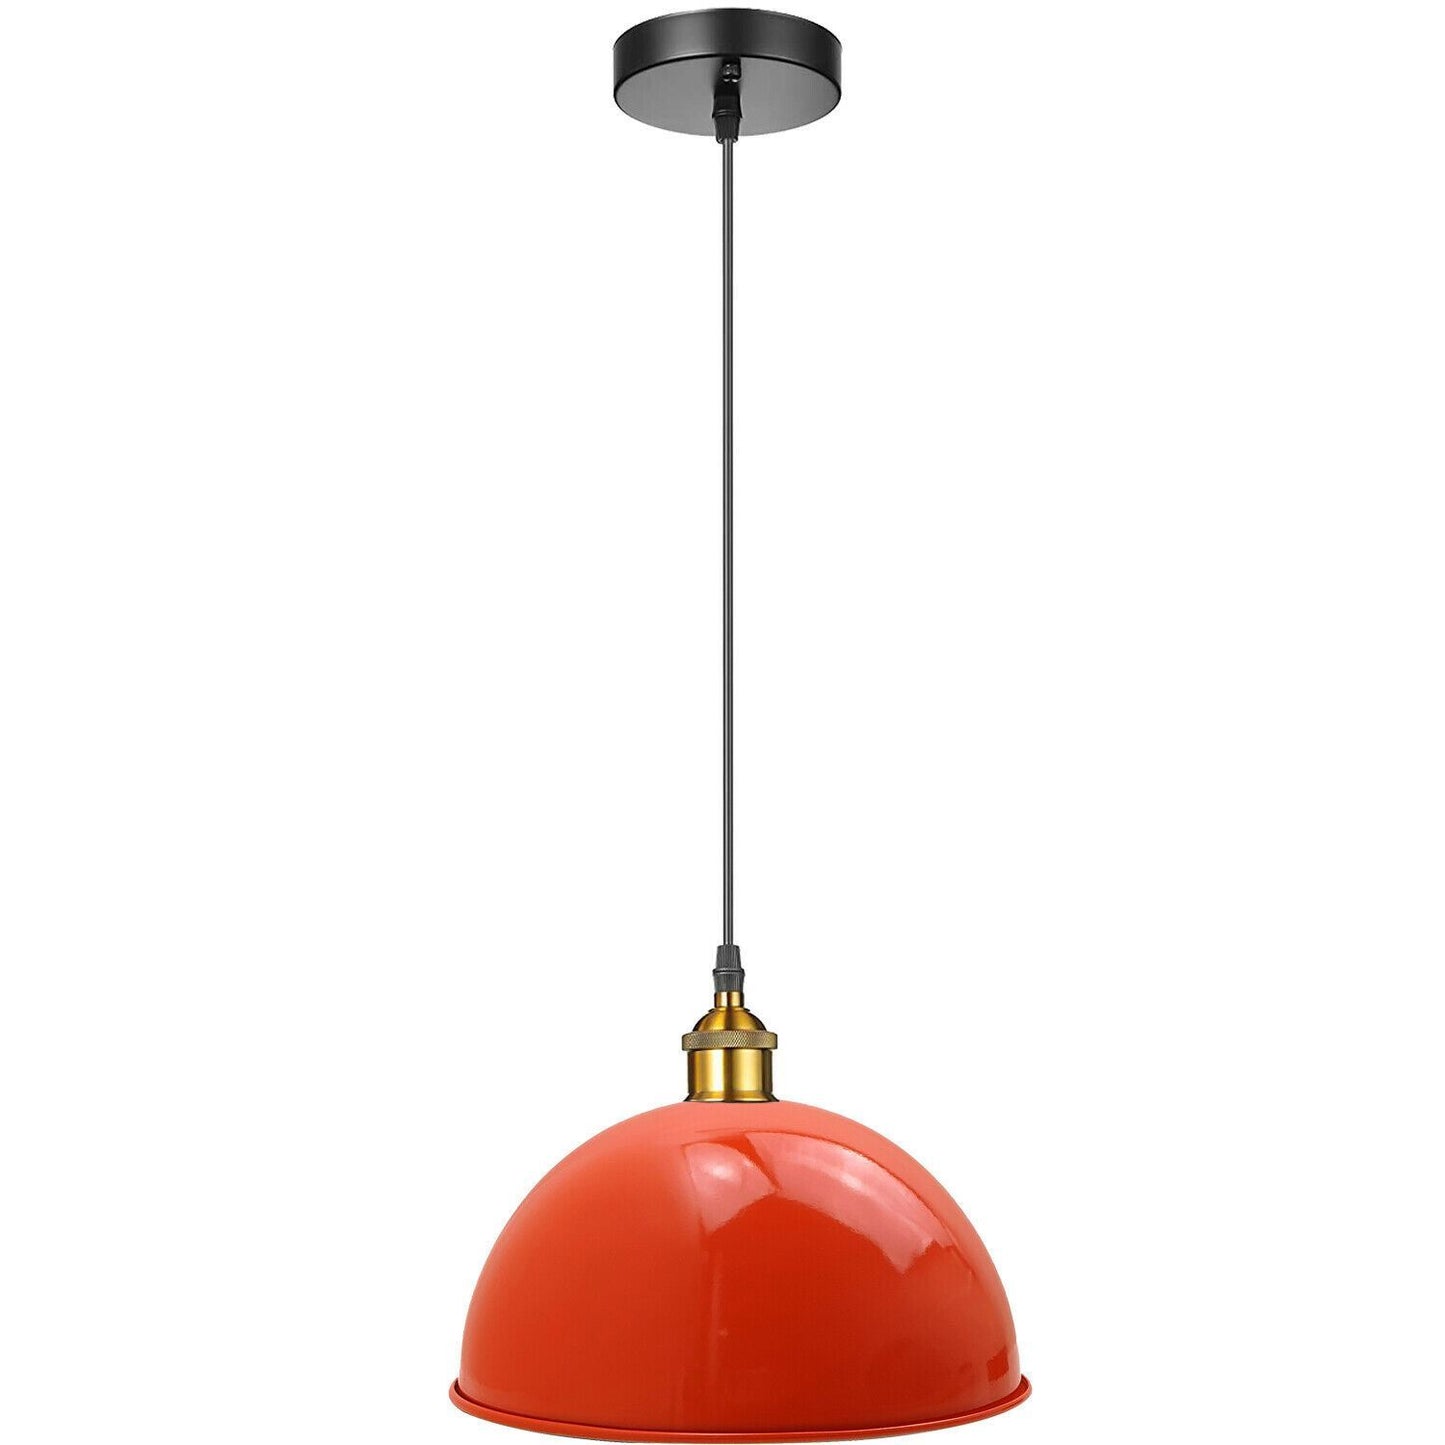 Chic Vintage Orange Dome Pendant Light with Adjustable Wire